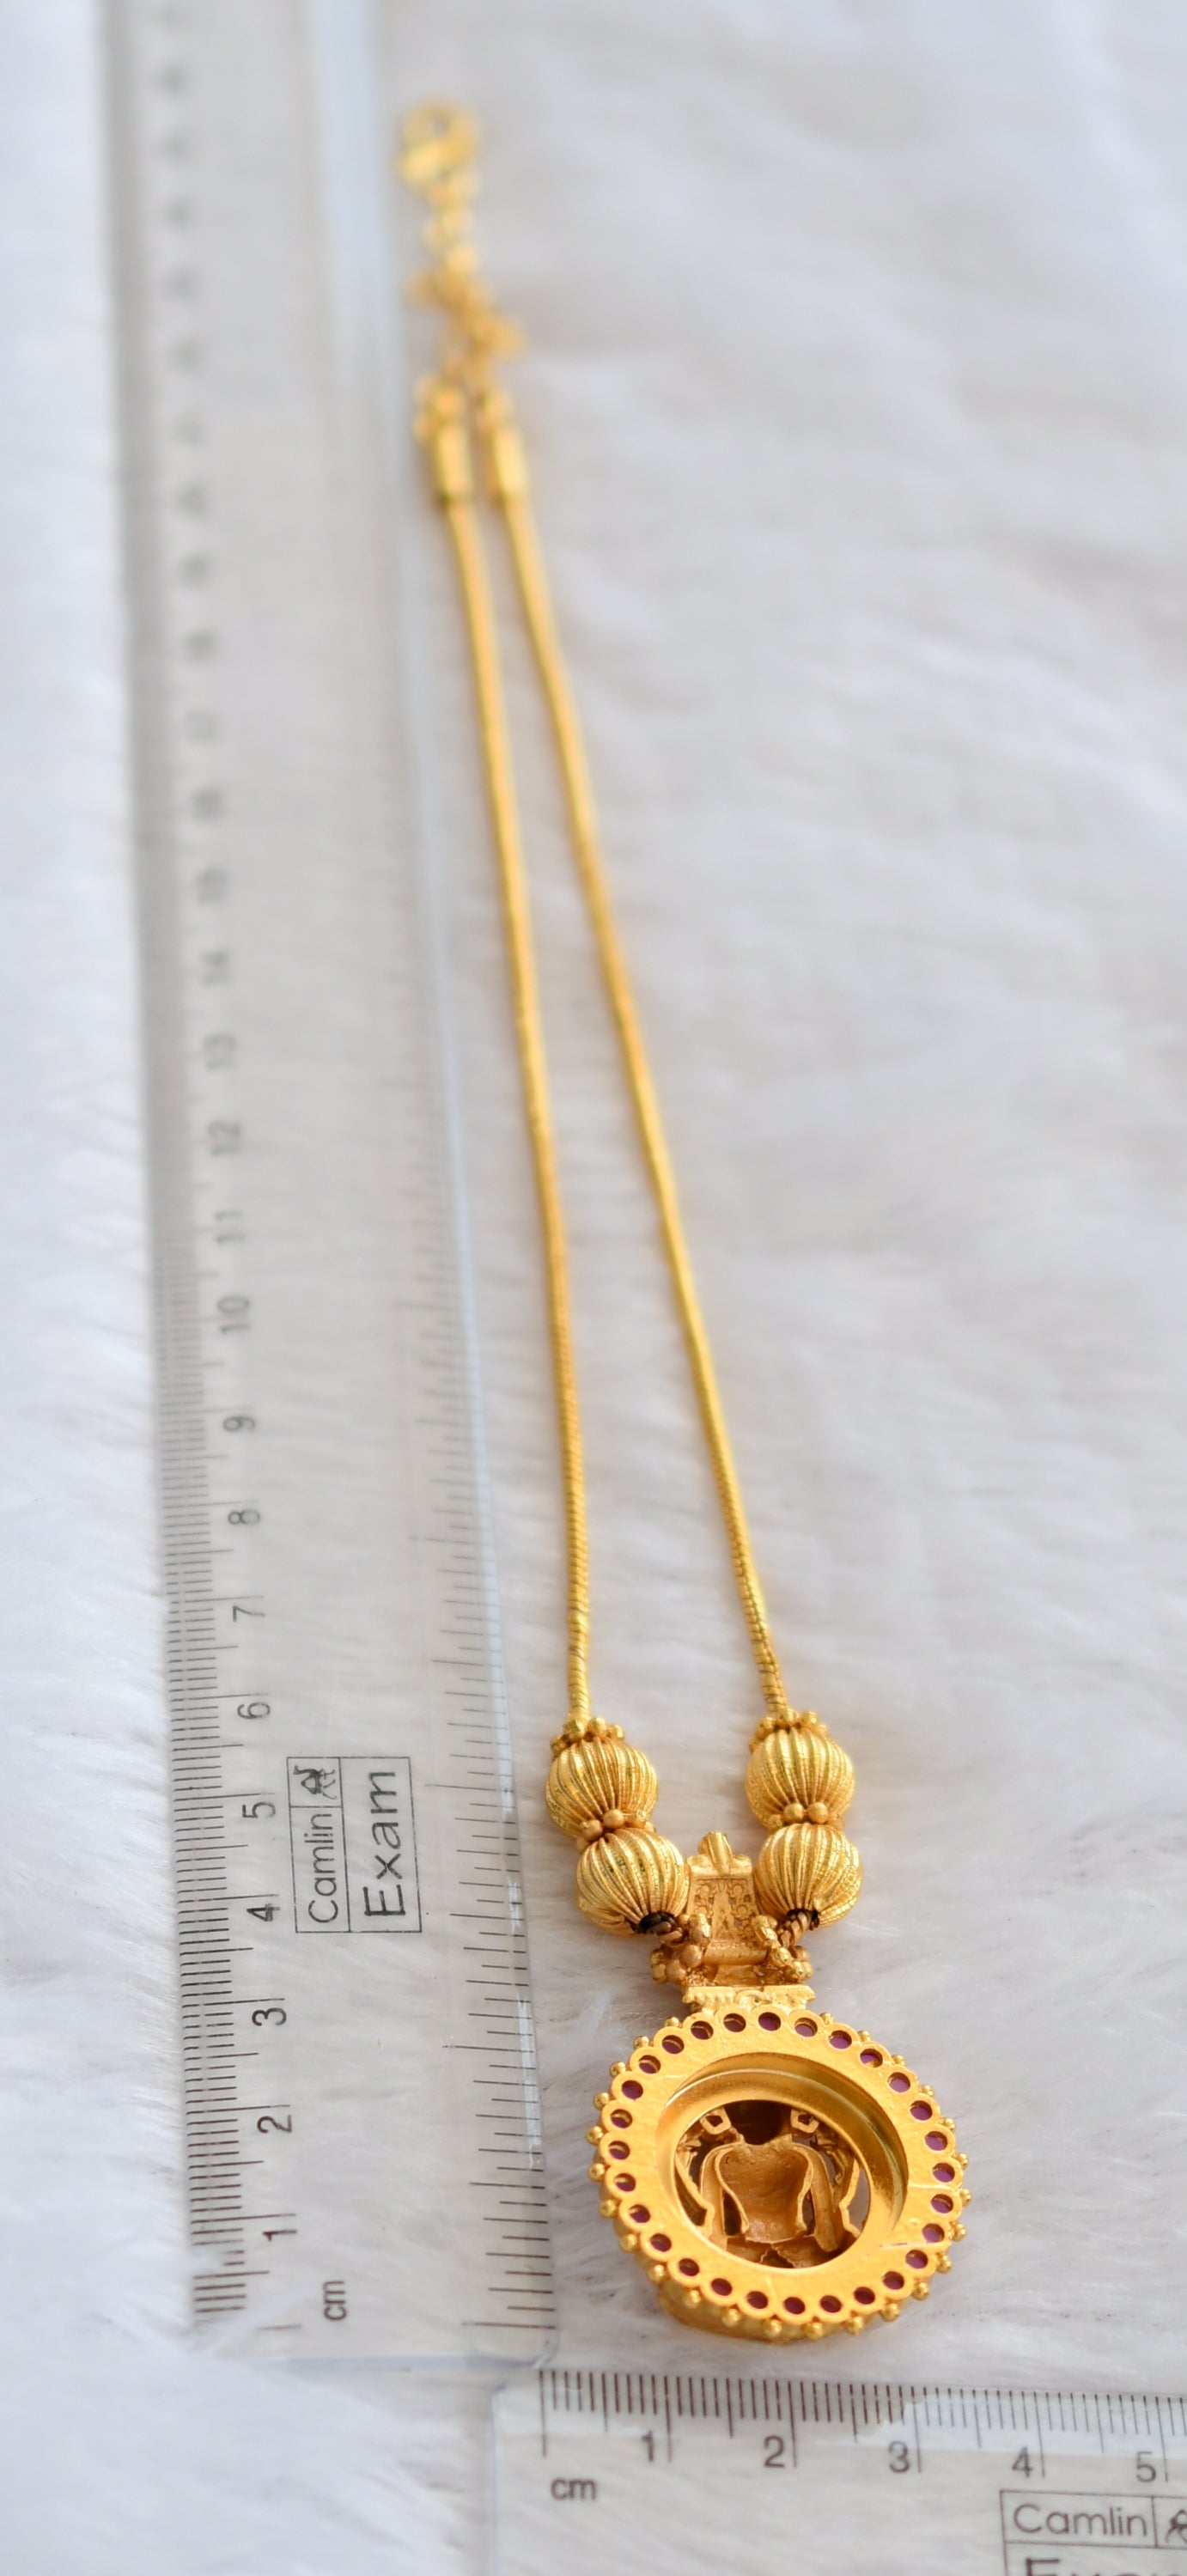 Gold tone ruby kerala style lakshmi kodi necklace dj-46349